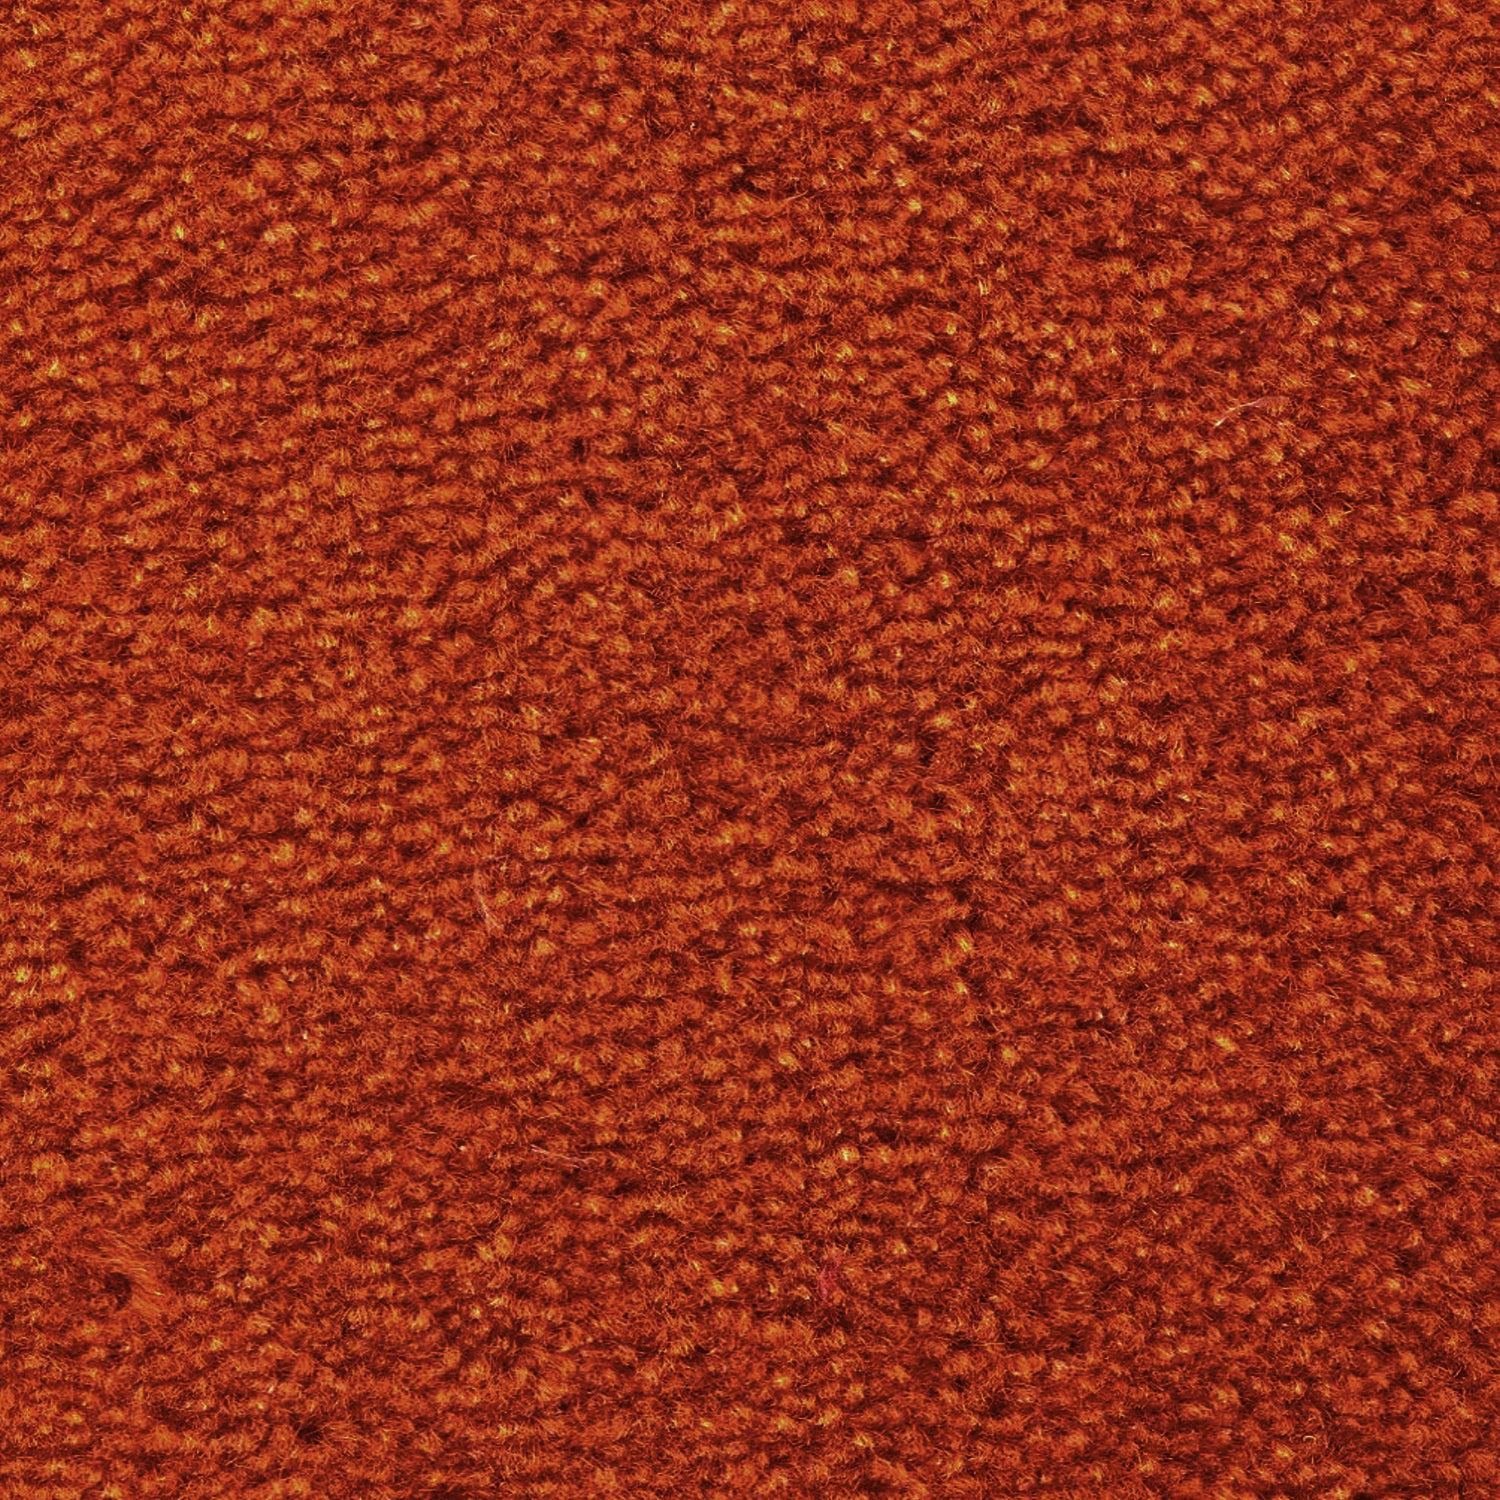 Wool broadloom carpet swatch in a cut pile texture in burnt orange.